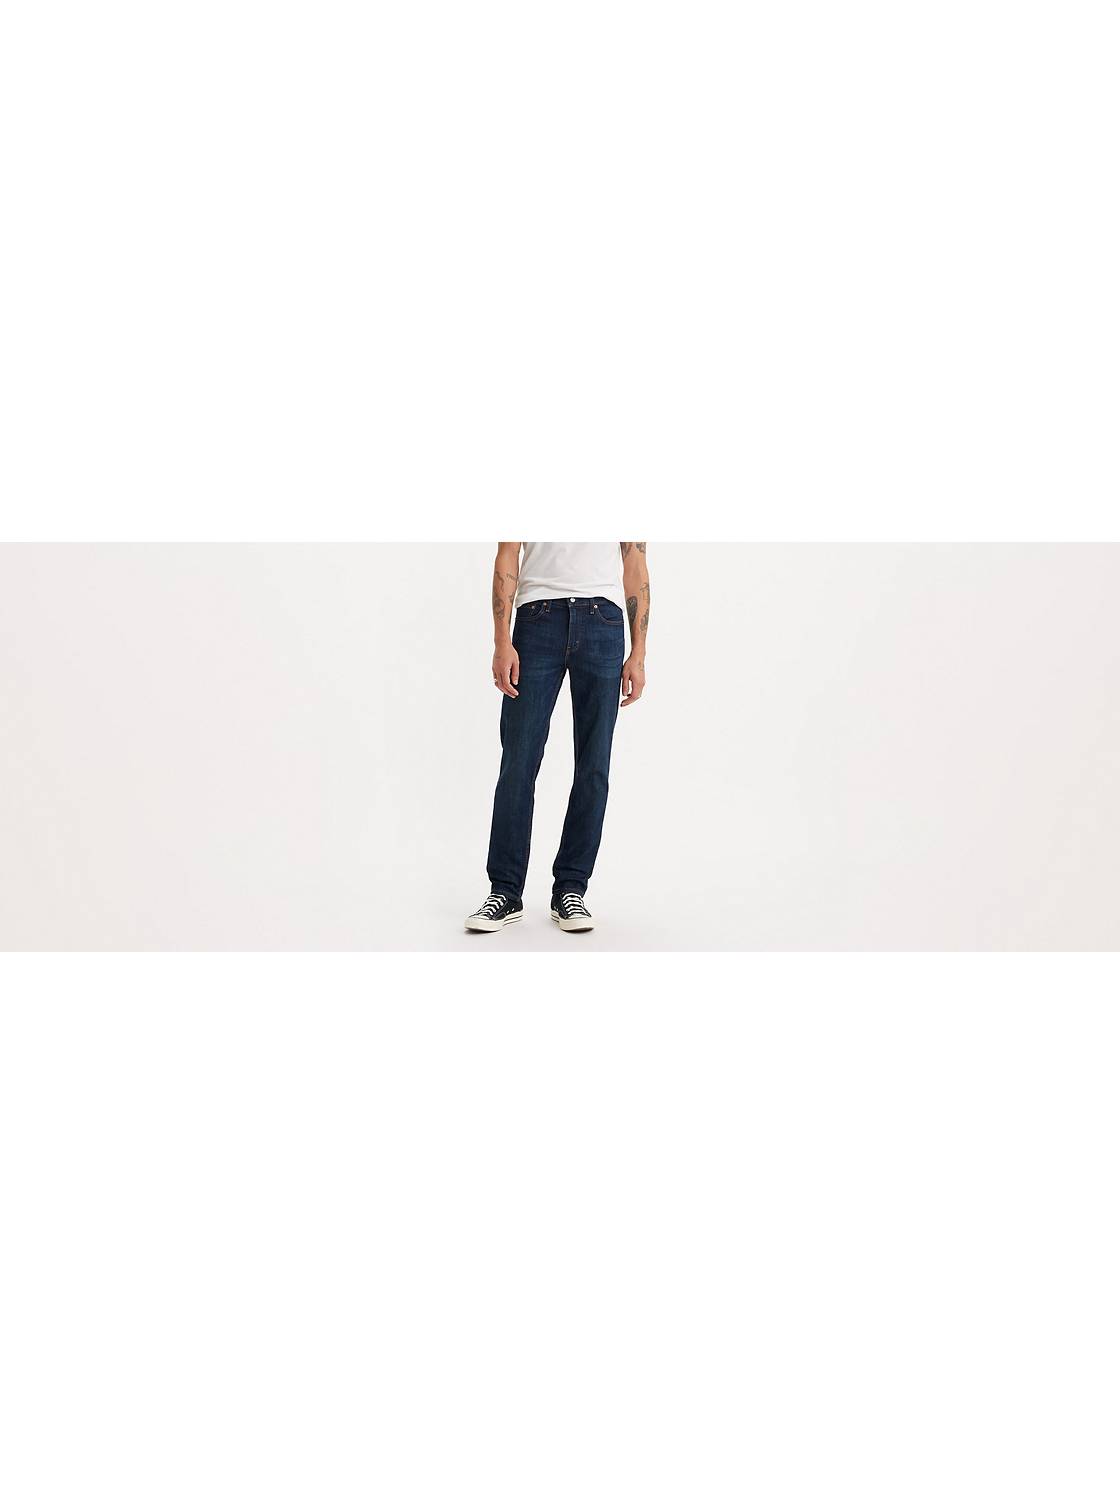 LSFYSZD Men Spring Skinny Jeans Fashion Solid Color Low-Waist Slim-Fit  Denim Pants for Street Daily Life Light Blue/Black